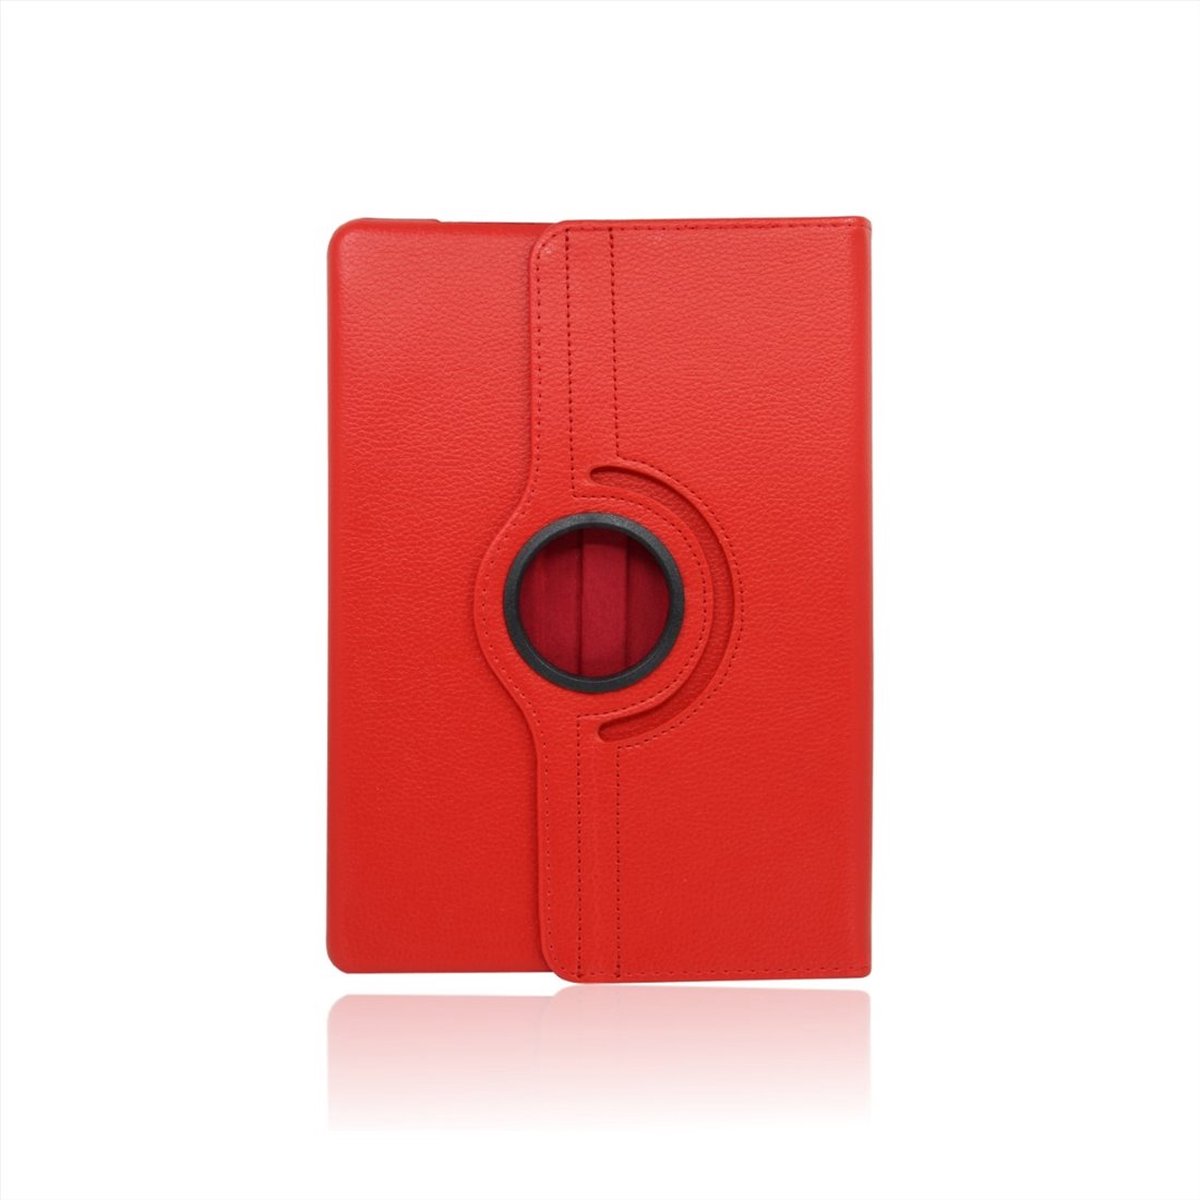 Apple iPad mini 4/5 7.9 inch 360° Draaibare Wallet case /flipcase stand/ hardcover achterzijde/ kleur Rood